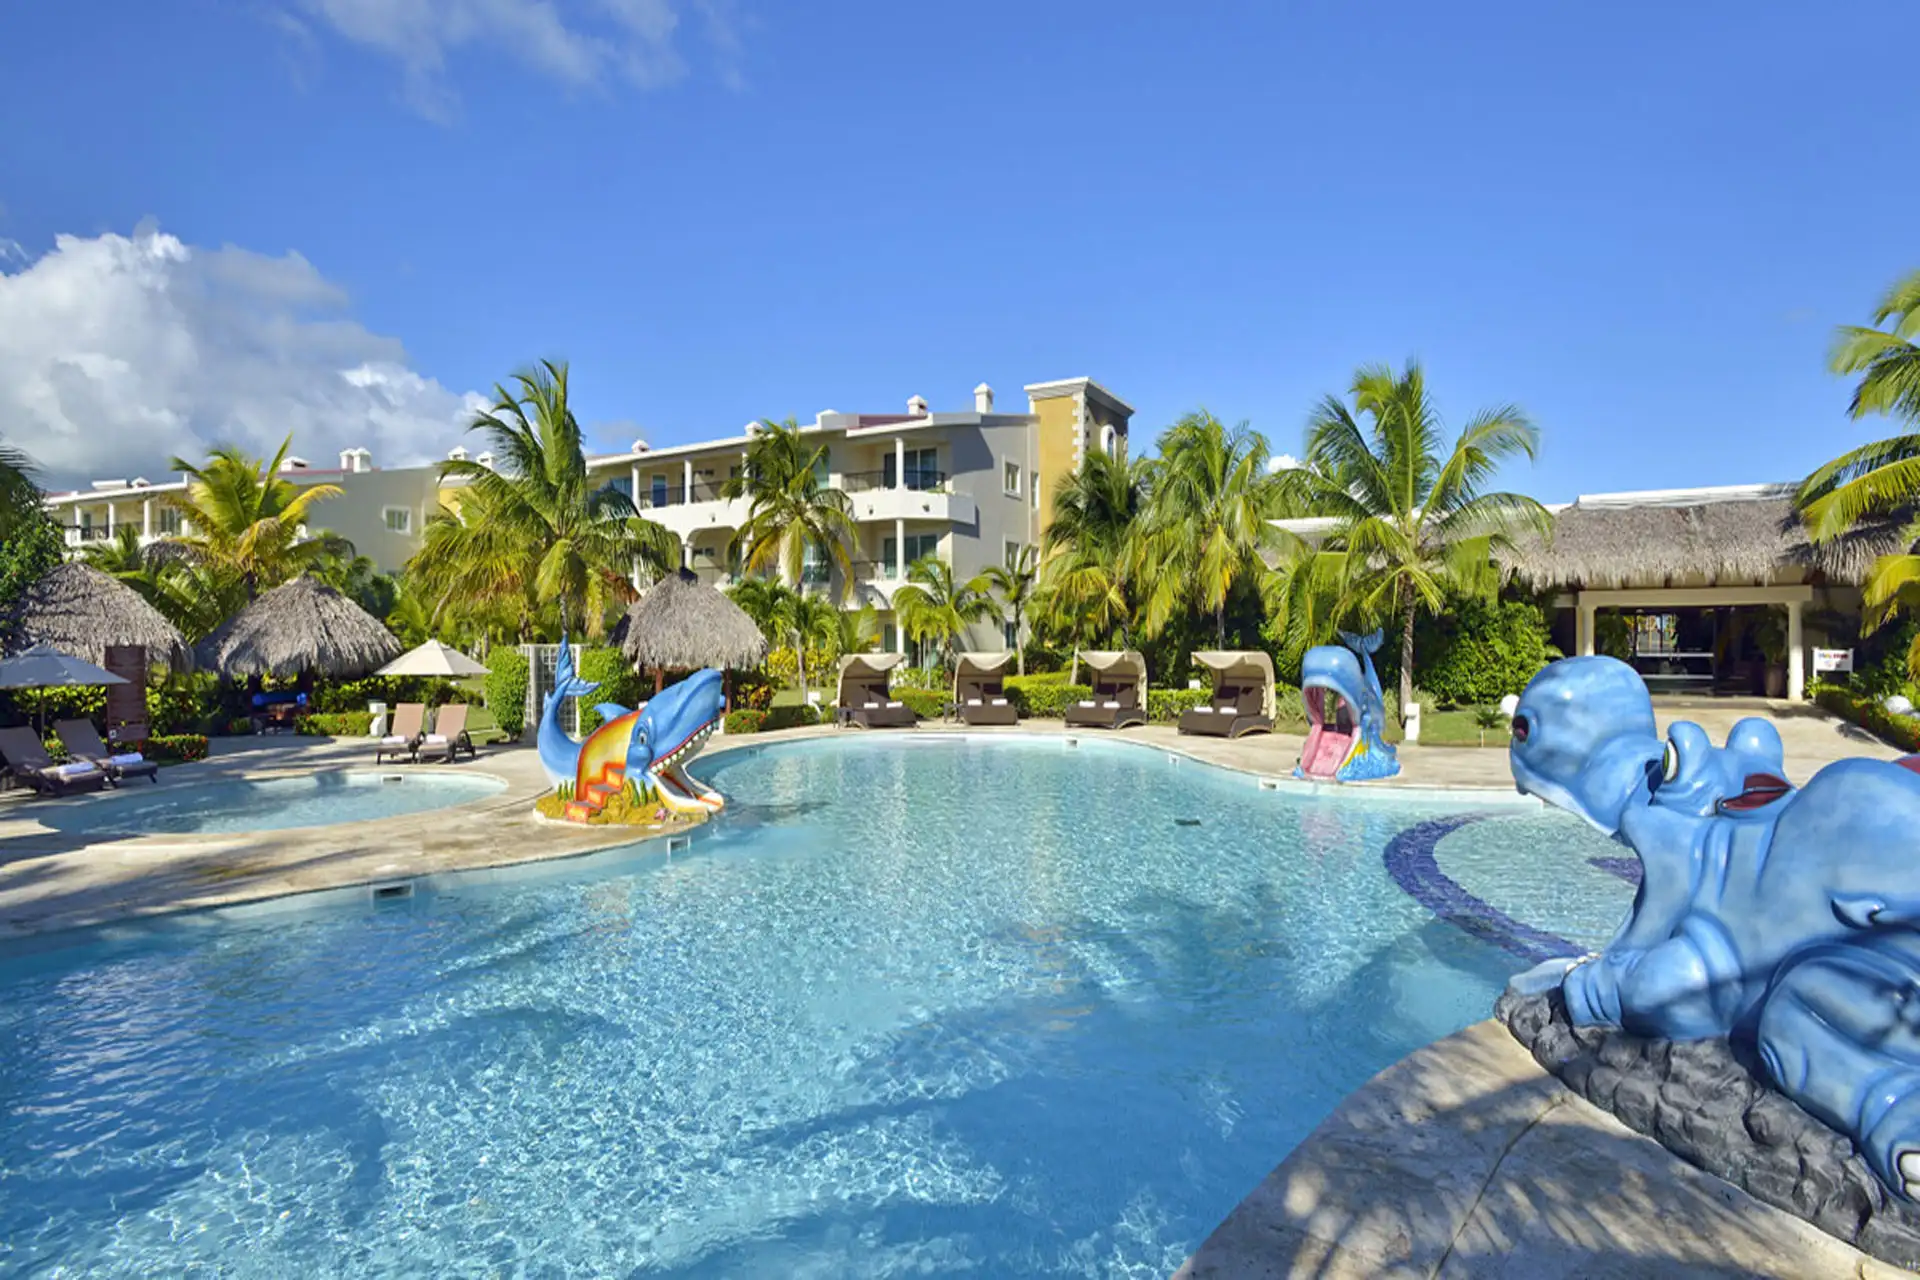 Pool and children's slides at Paradisus Punta Cana Resort